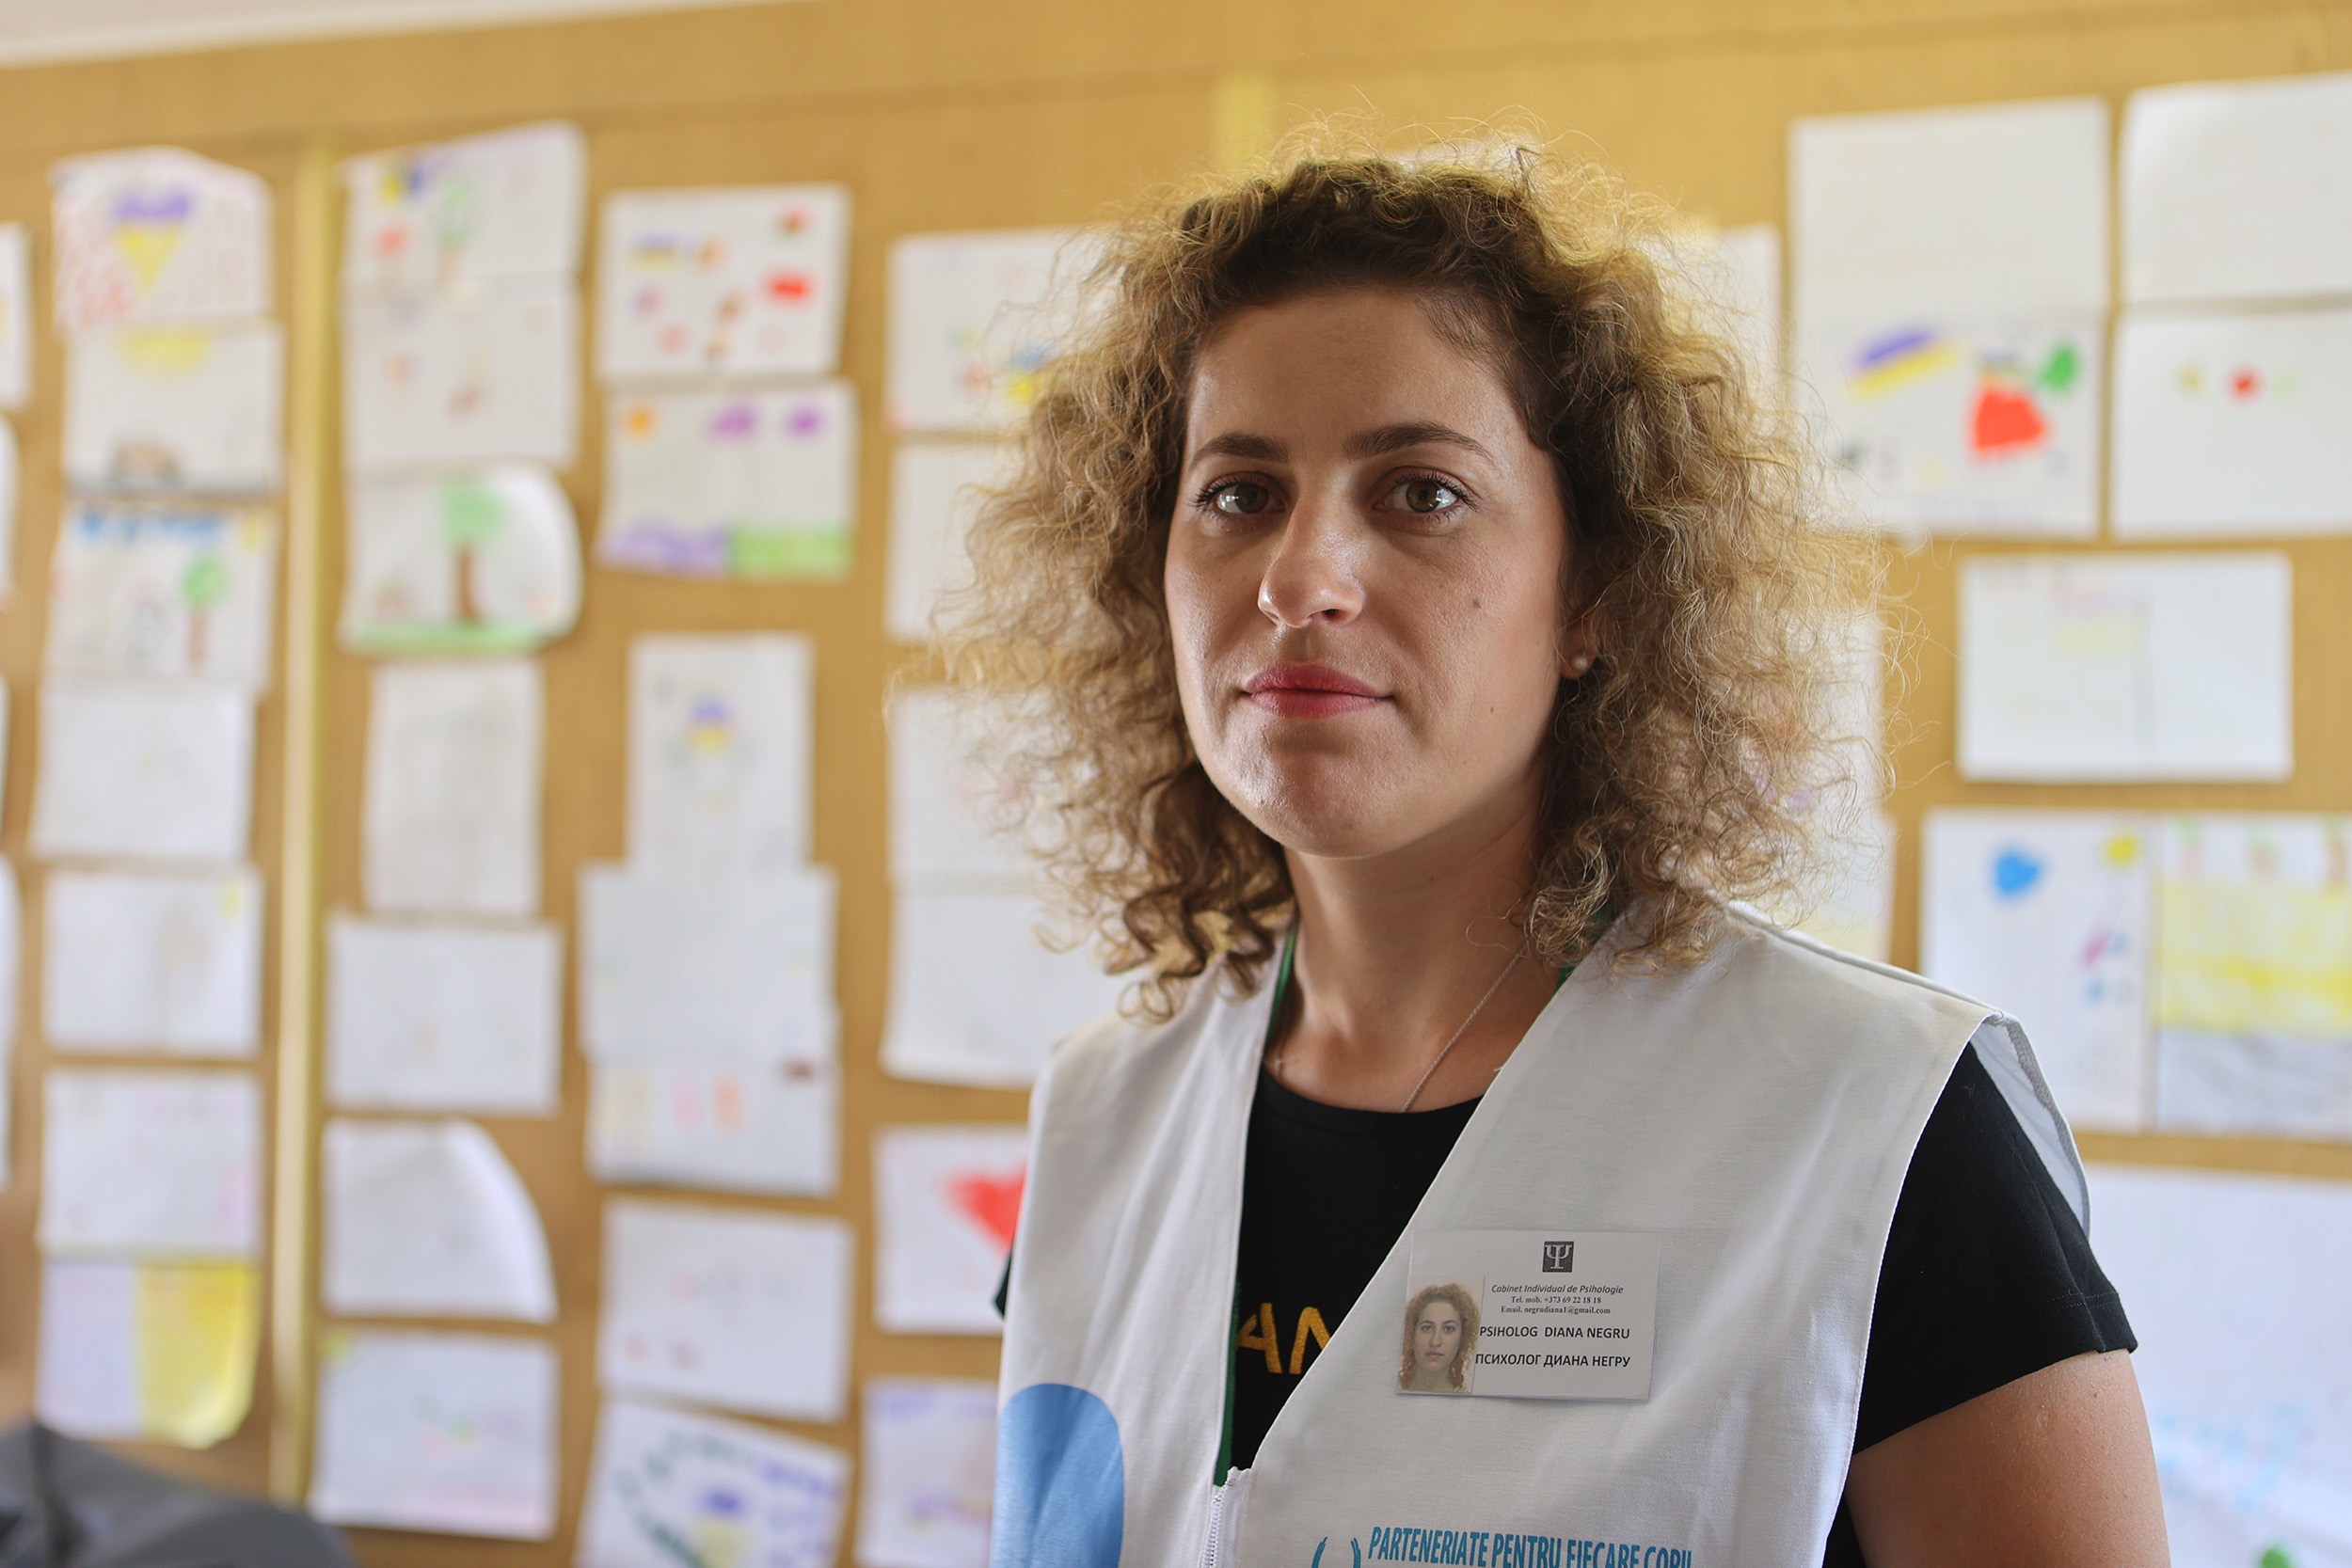 Diana Negru, a psychologist who works at the UNICEF Blue Dot refugee assistance center in Palanca.